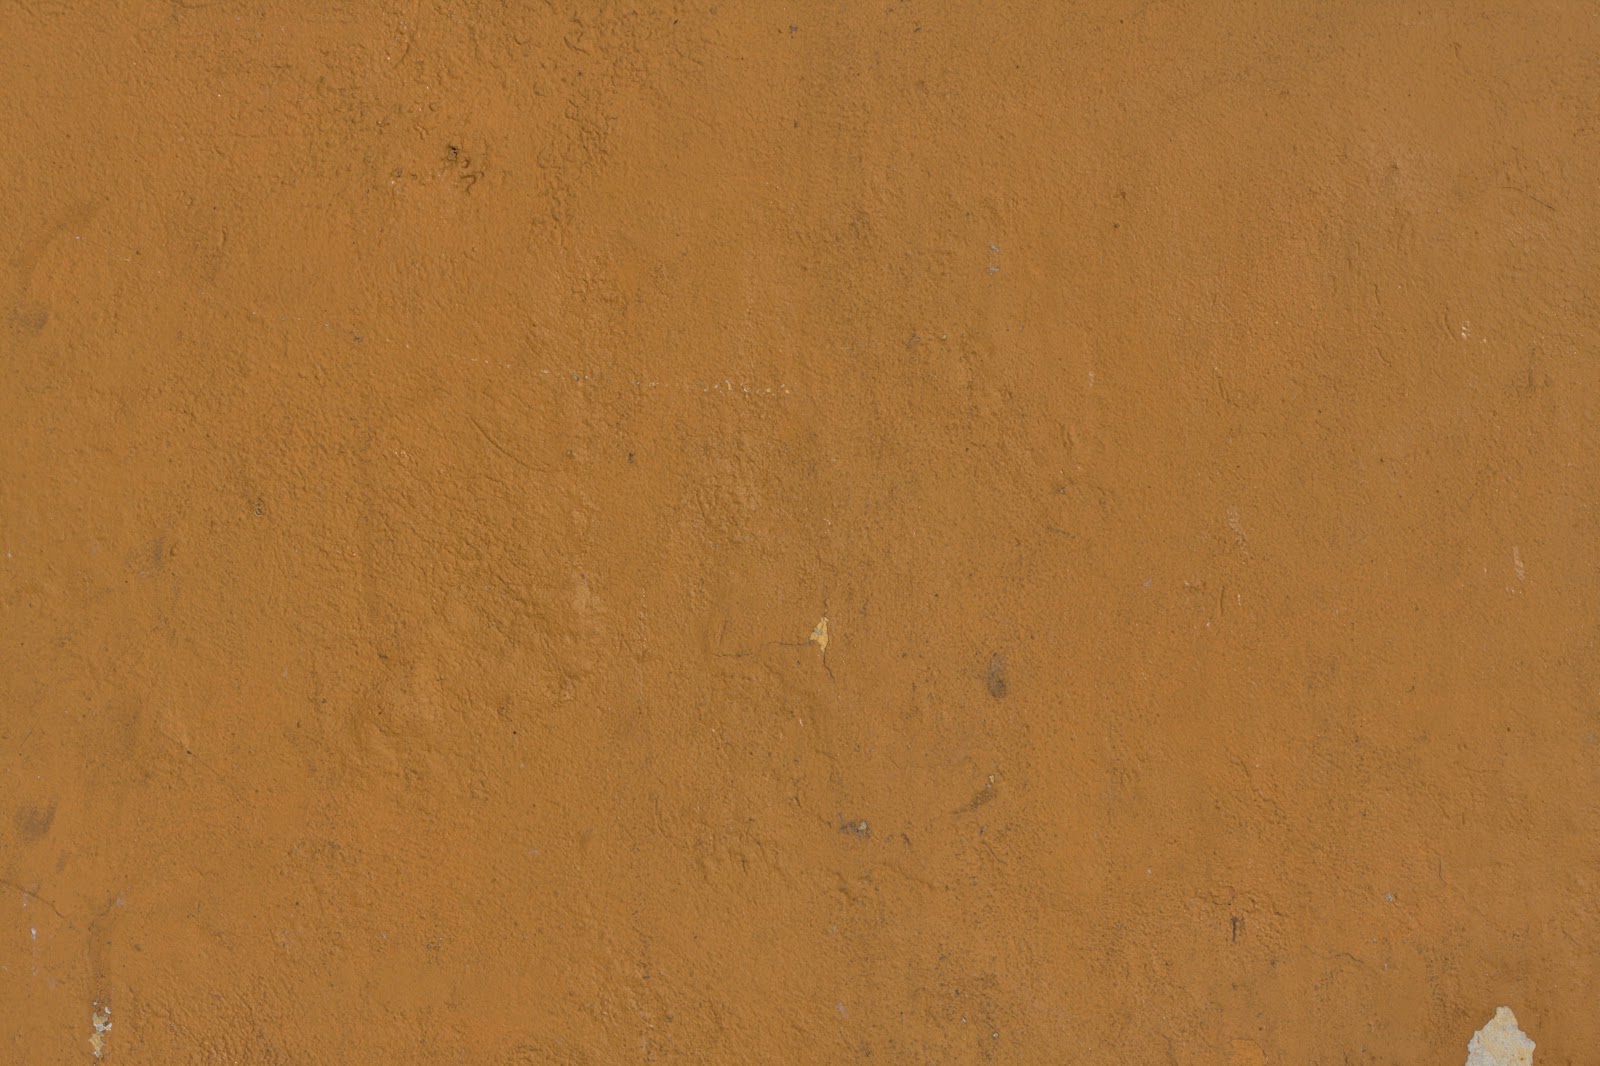 Wall stucco orange dirt texture 4770x3178 resolutuion